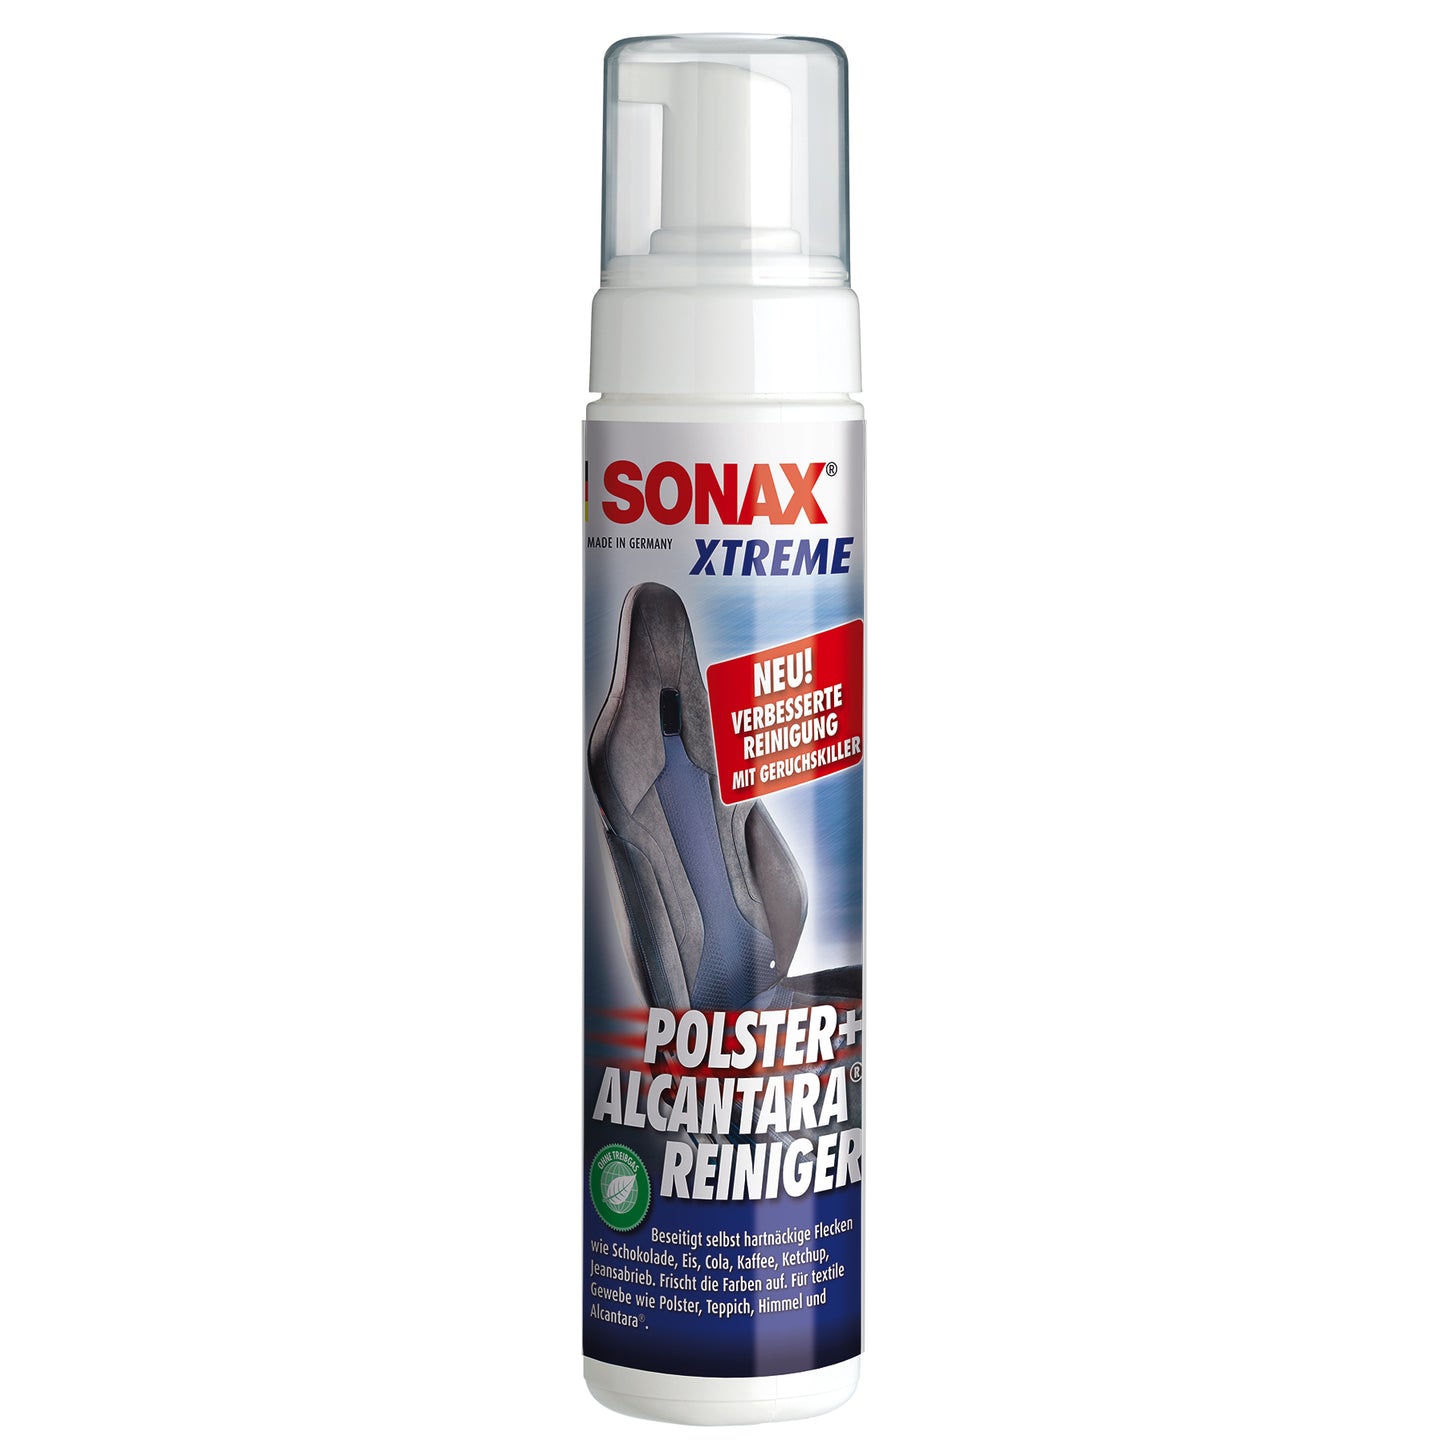 SONAX XTREME Alcantara + Fabric Cleaner (2 sizes available)